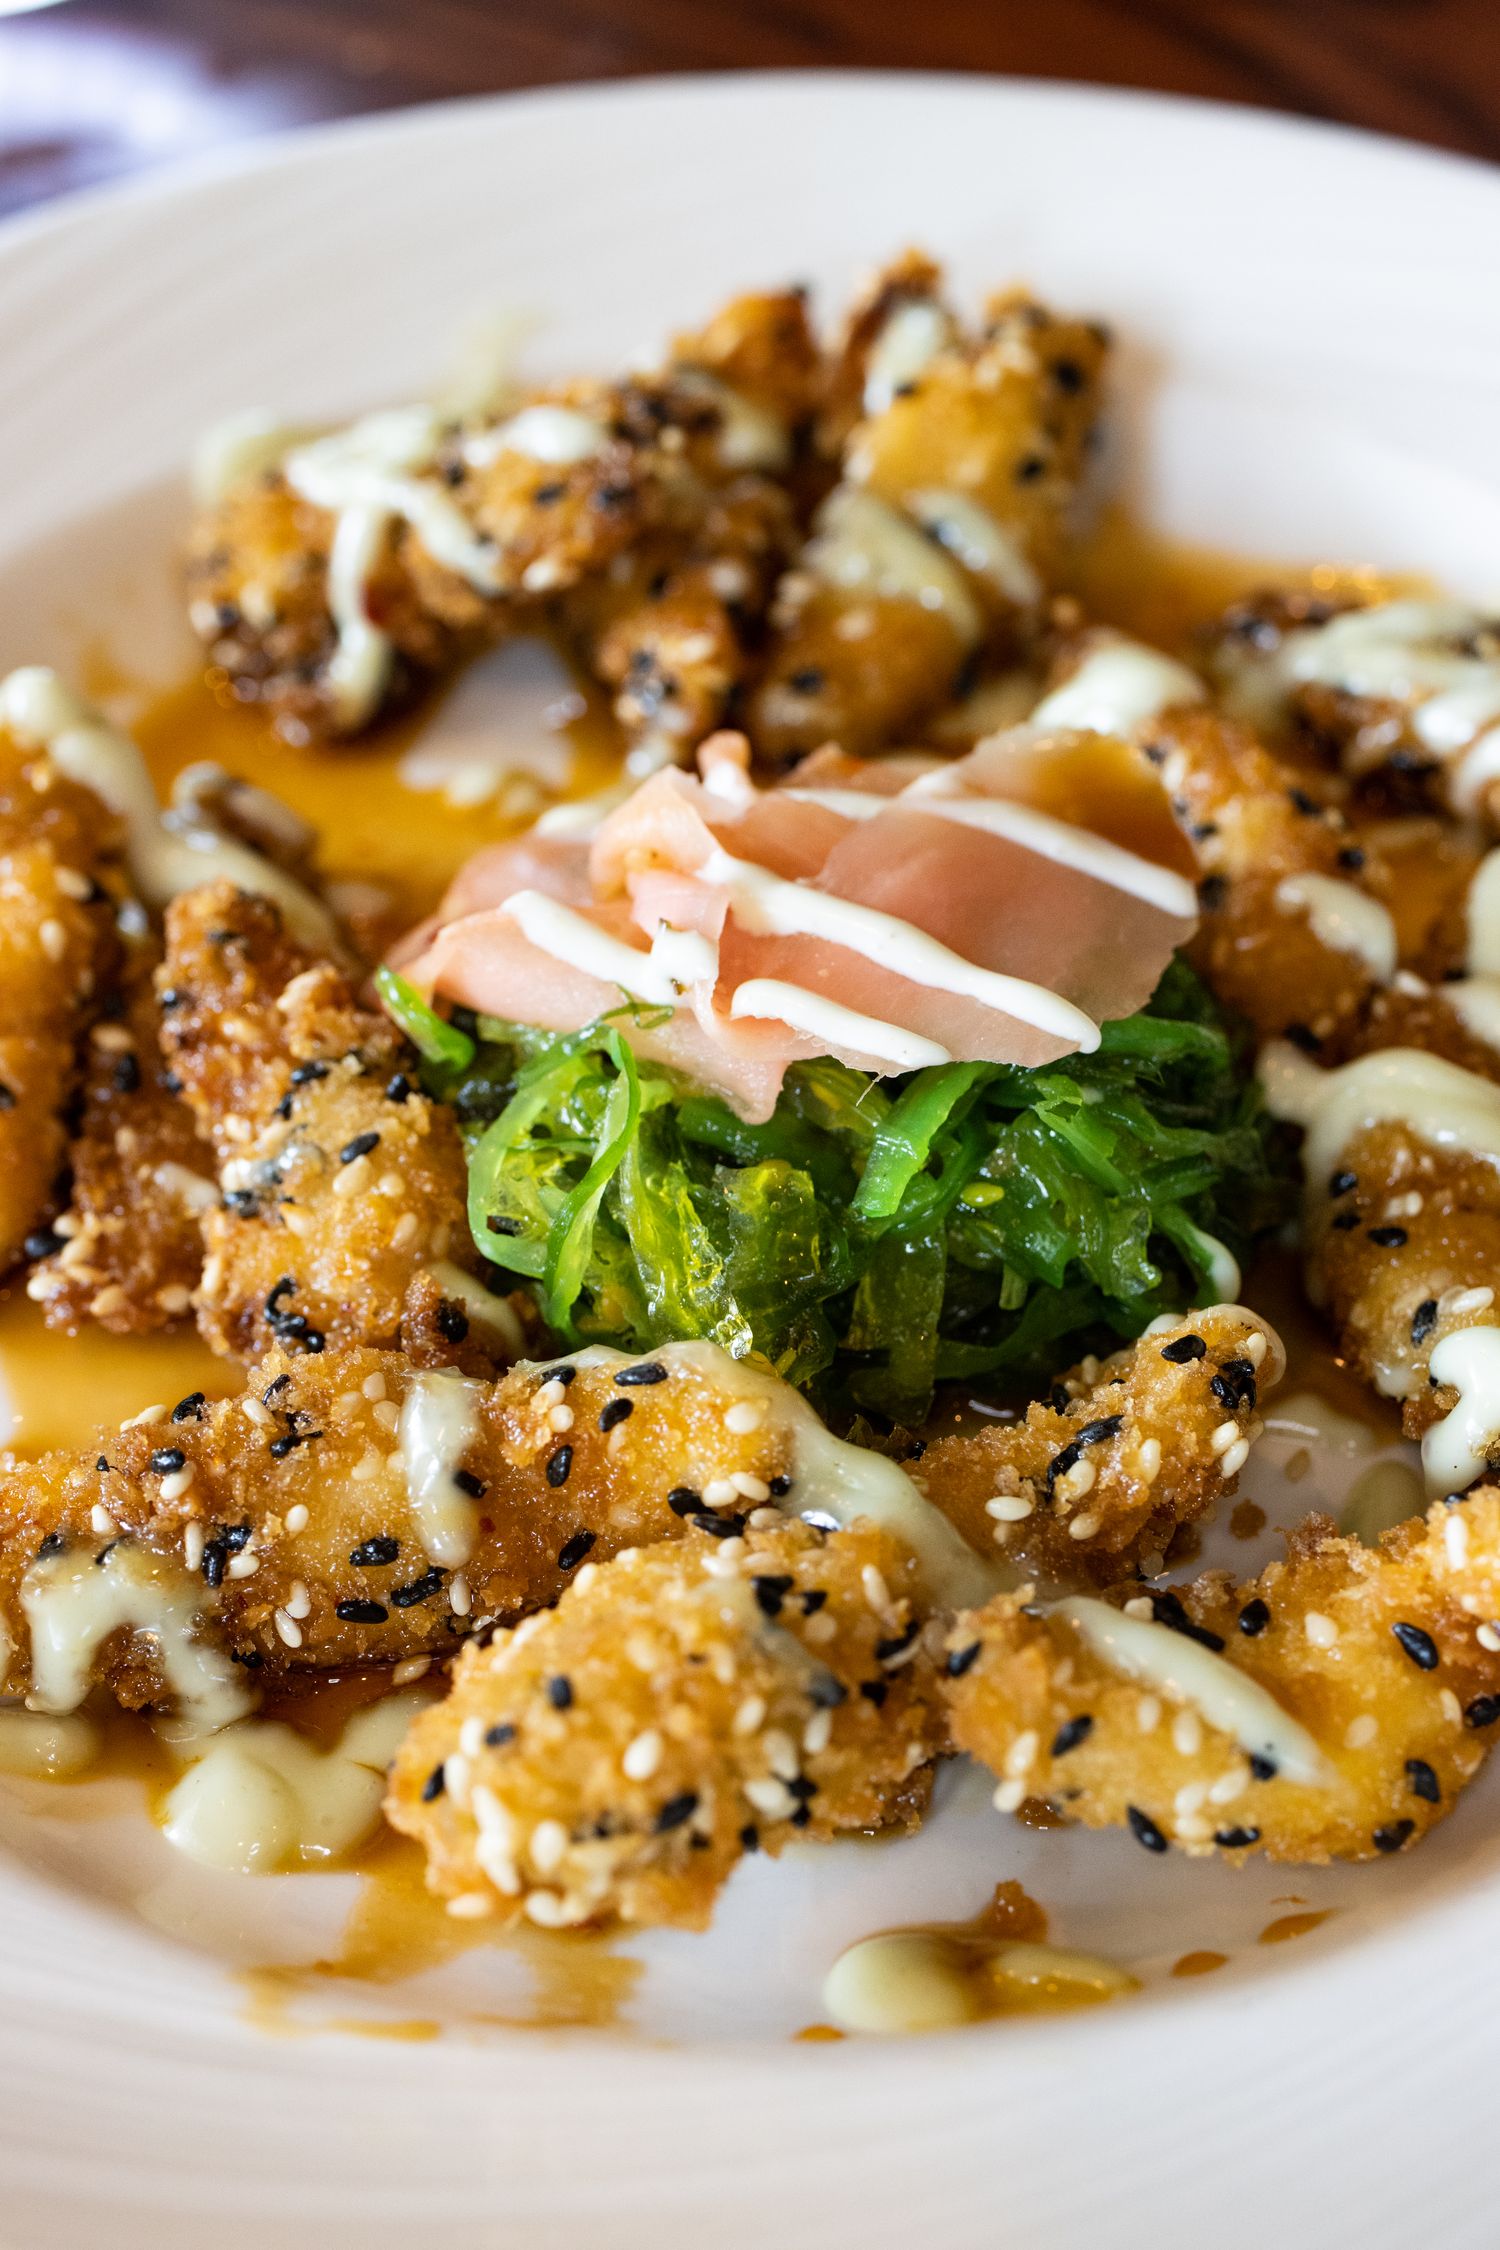 Sesame fried panko Rockfish “Bites” with Hawaiian BBQ, wasabi cream pickled ginger, and seaweed salad